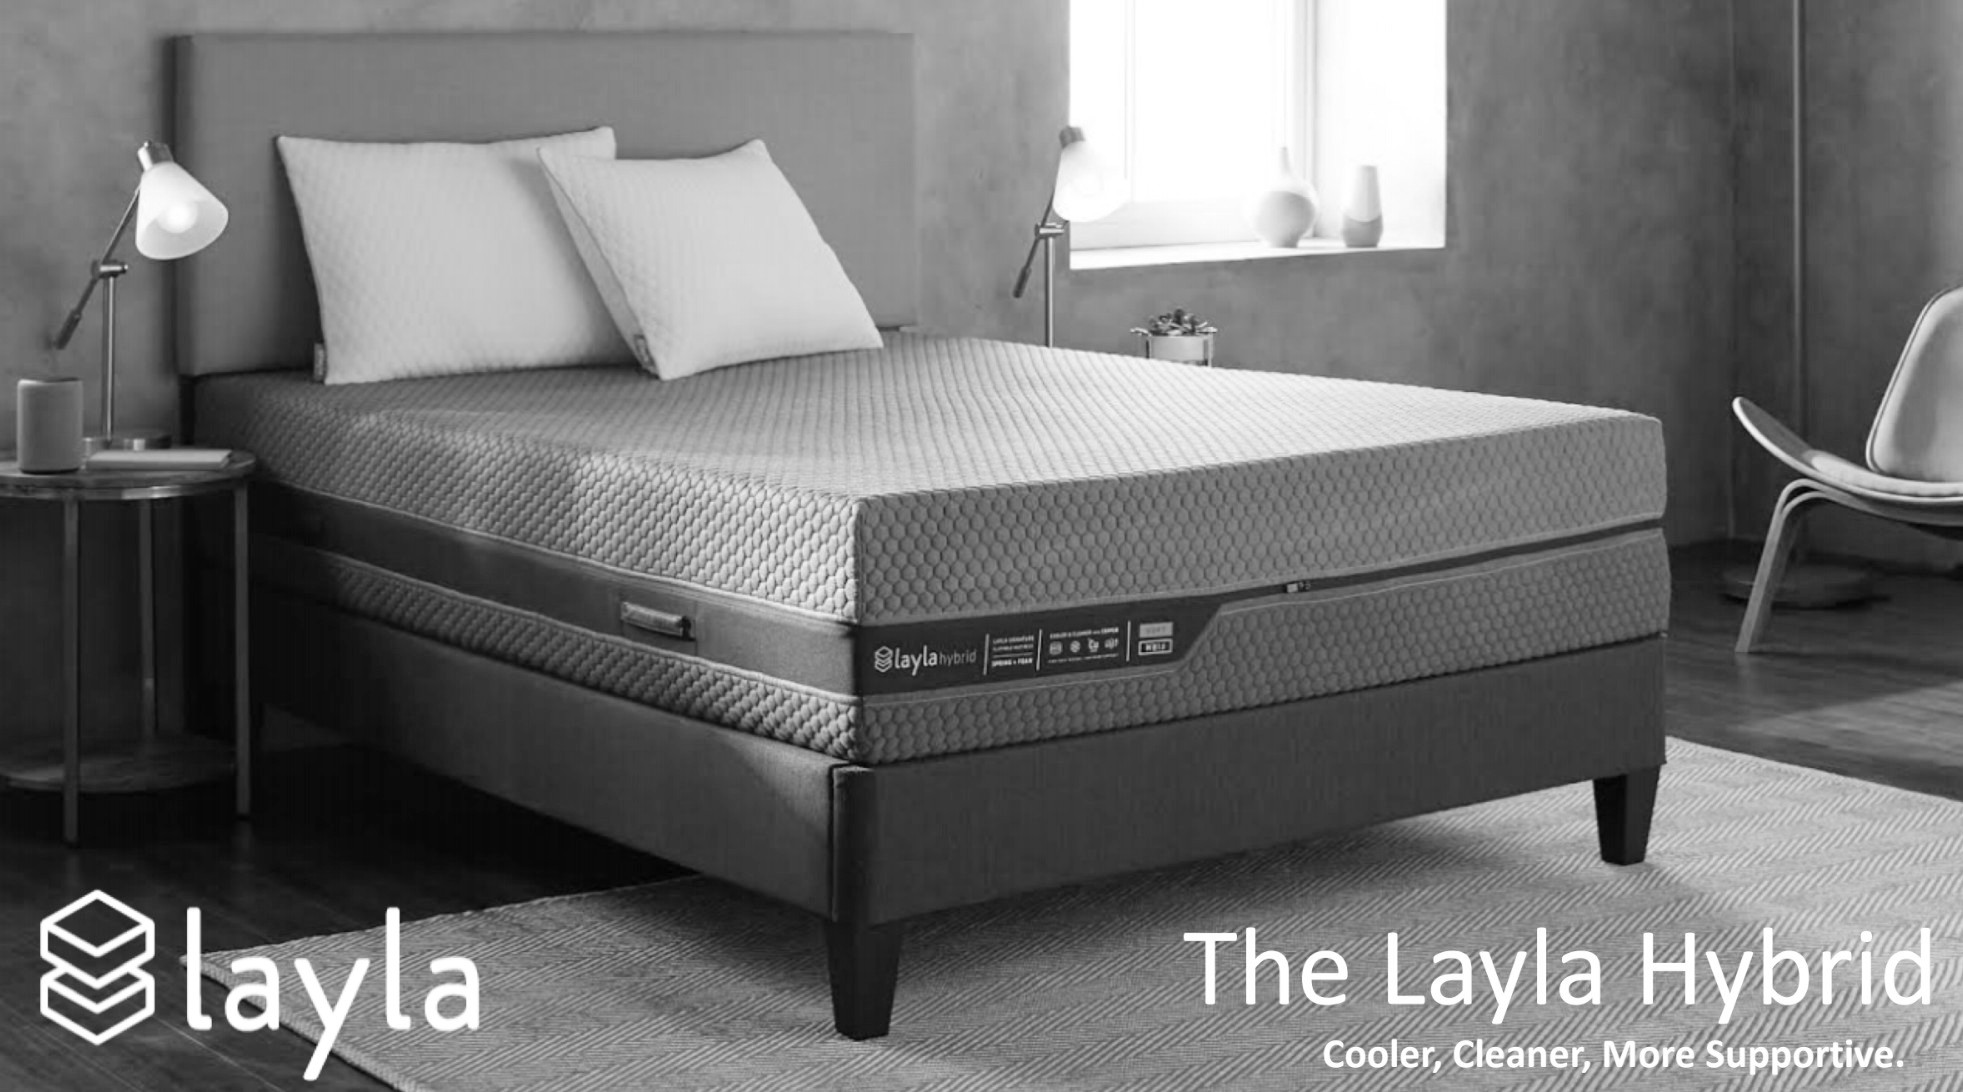 layla hybrid mattress vs dreamcloud